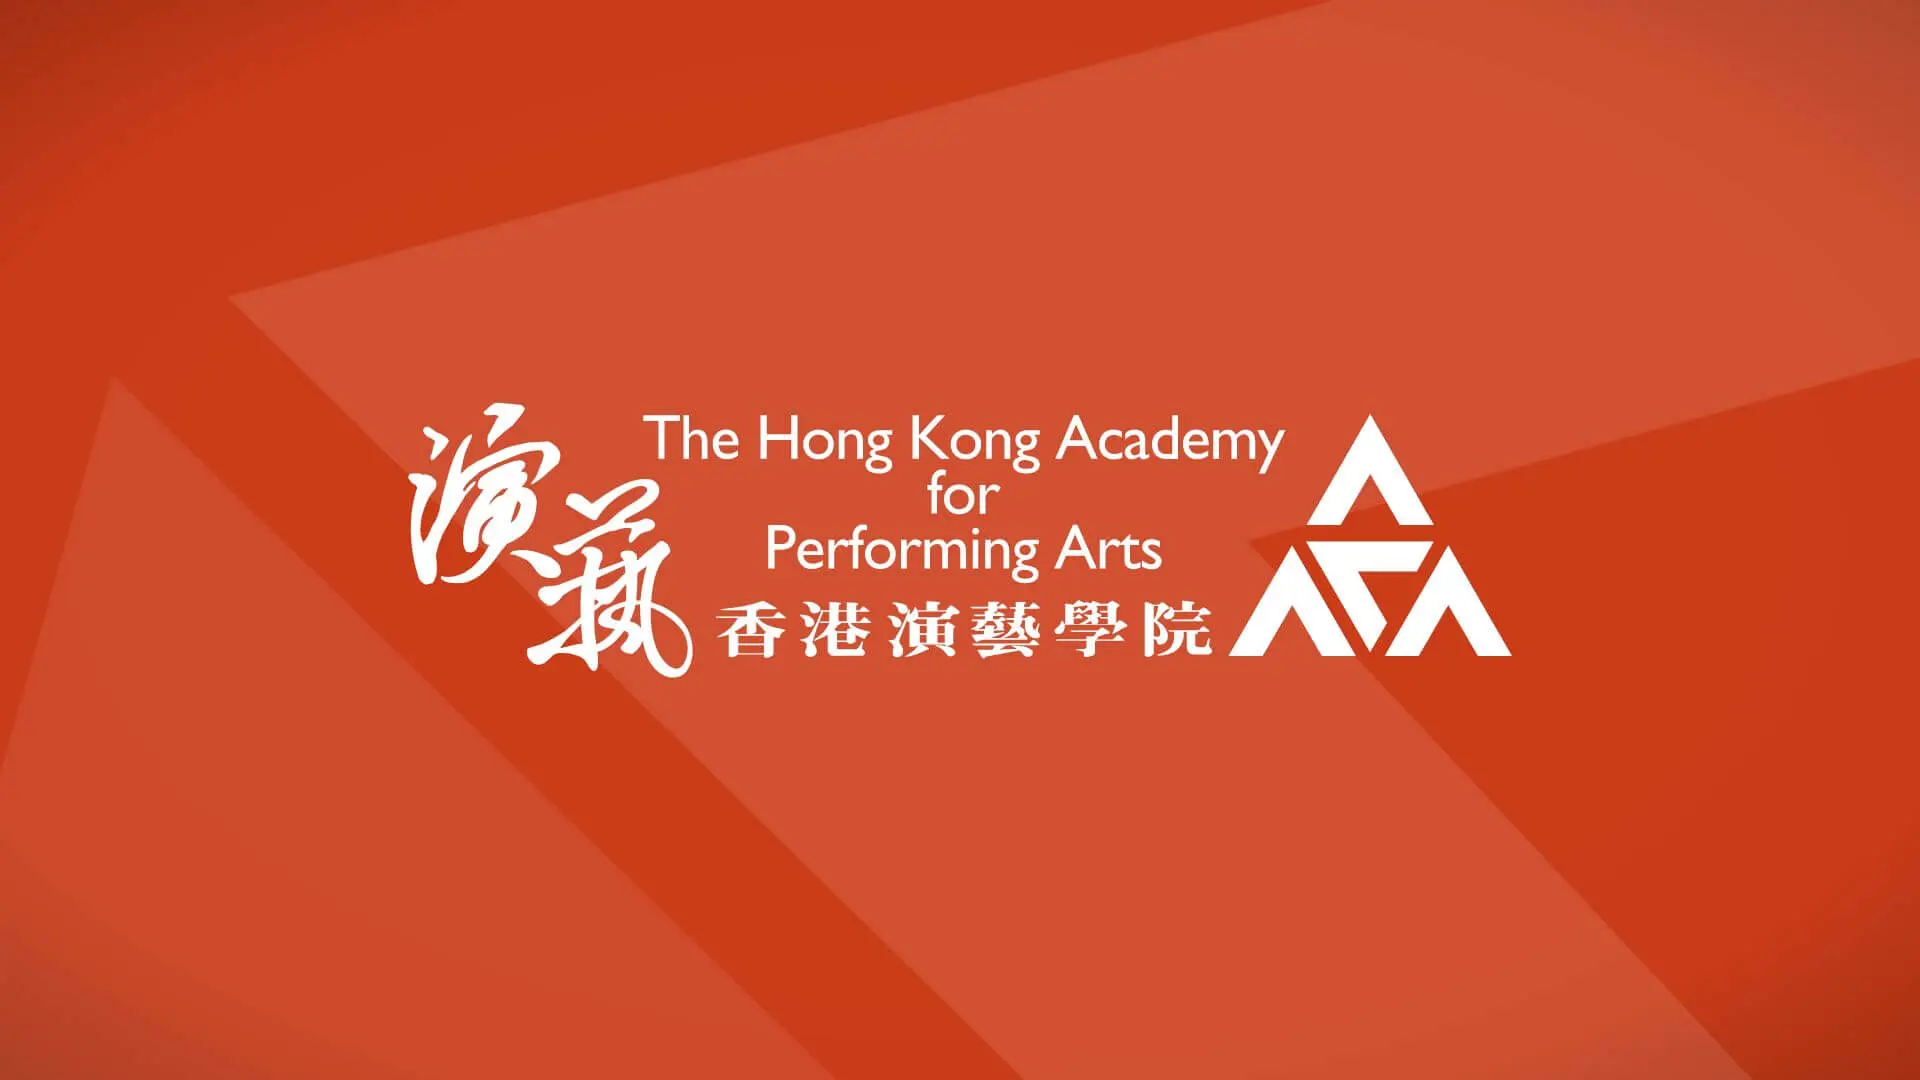 Academy Master of Music Graduation Recital - Trombone: Terence Lo